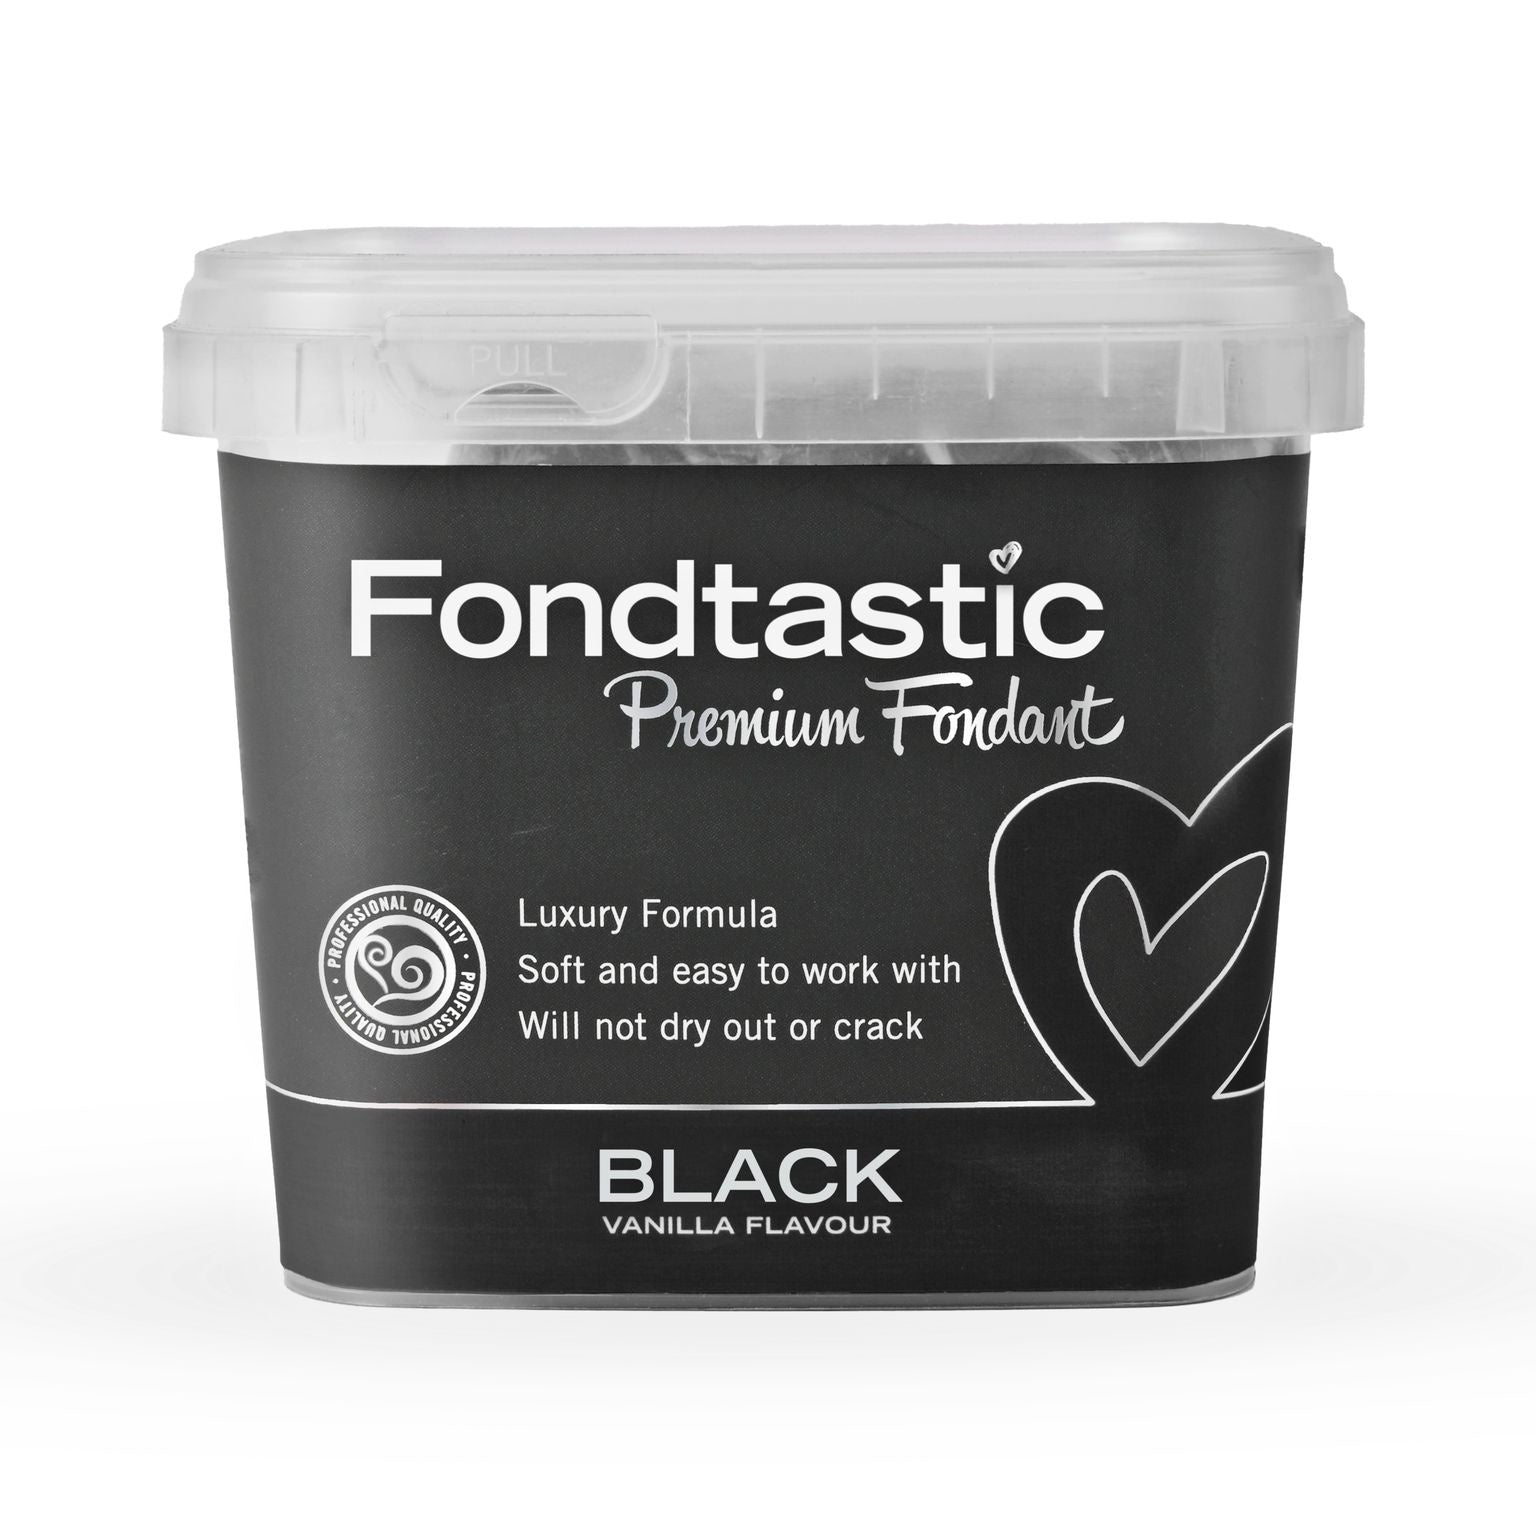 Fondtastic Premium Fondant - Black 1kg